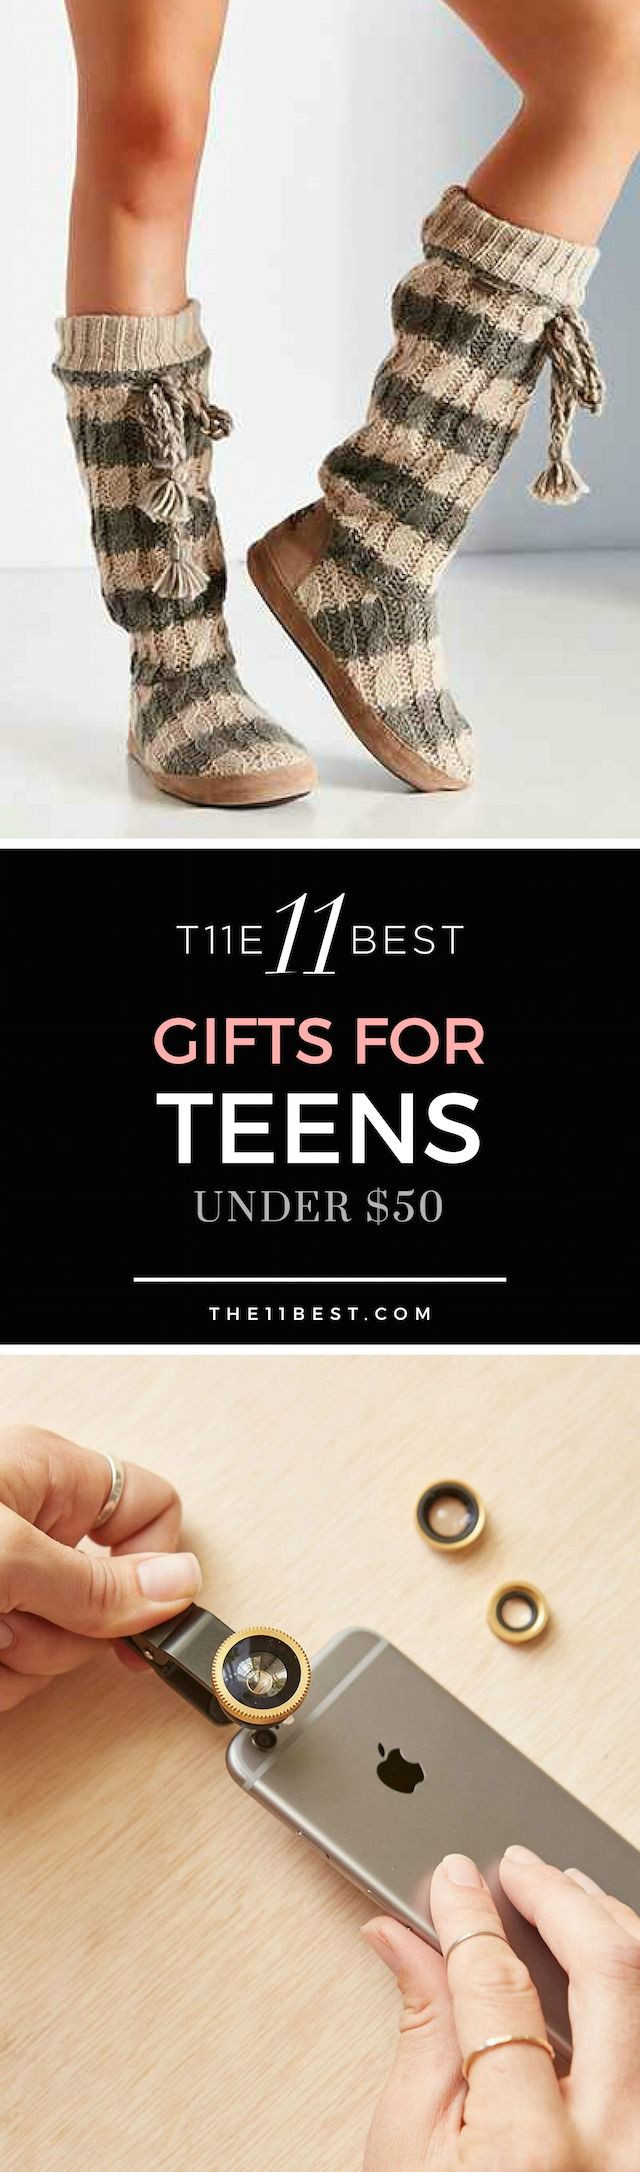 Girlfriend Gift Ideas Under $50
 The 11 Best Gifts for Teen Girls Under $50